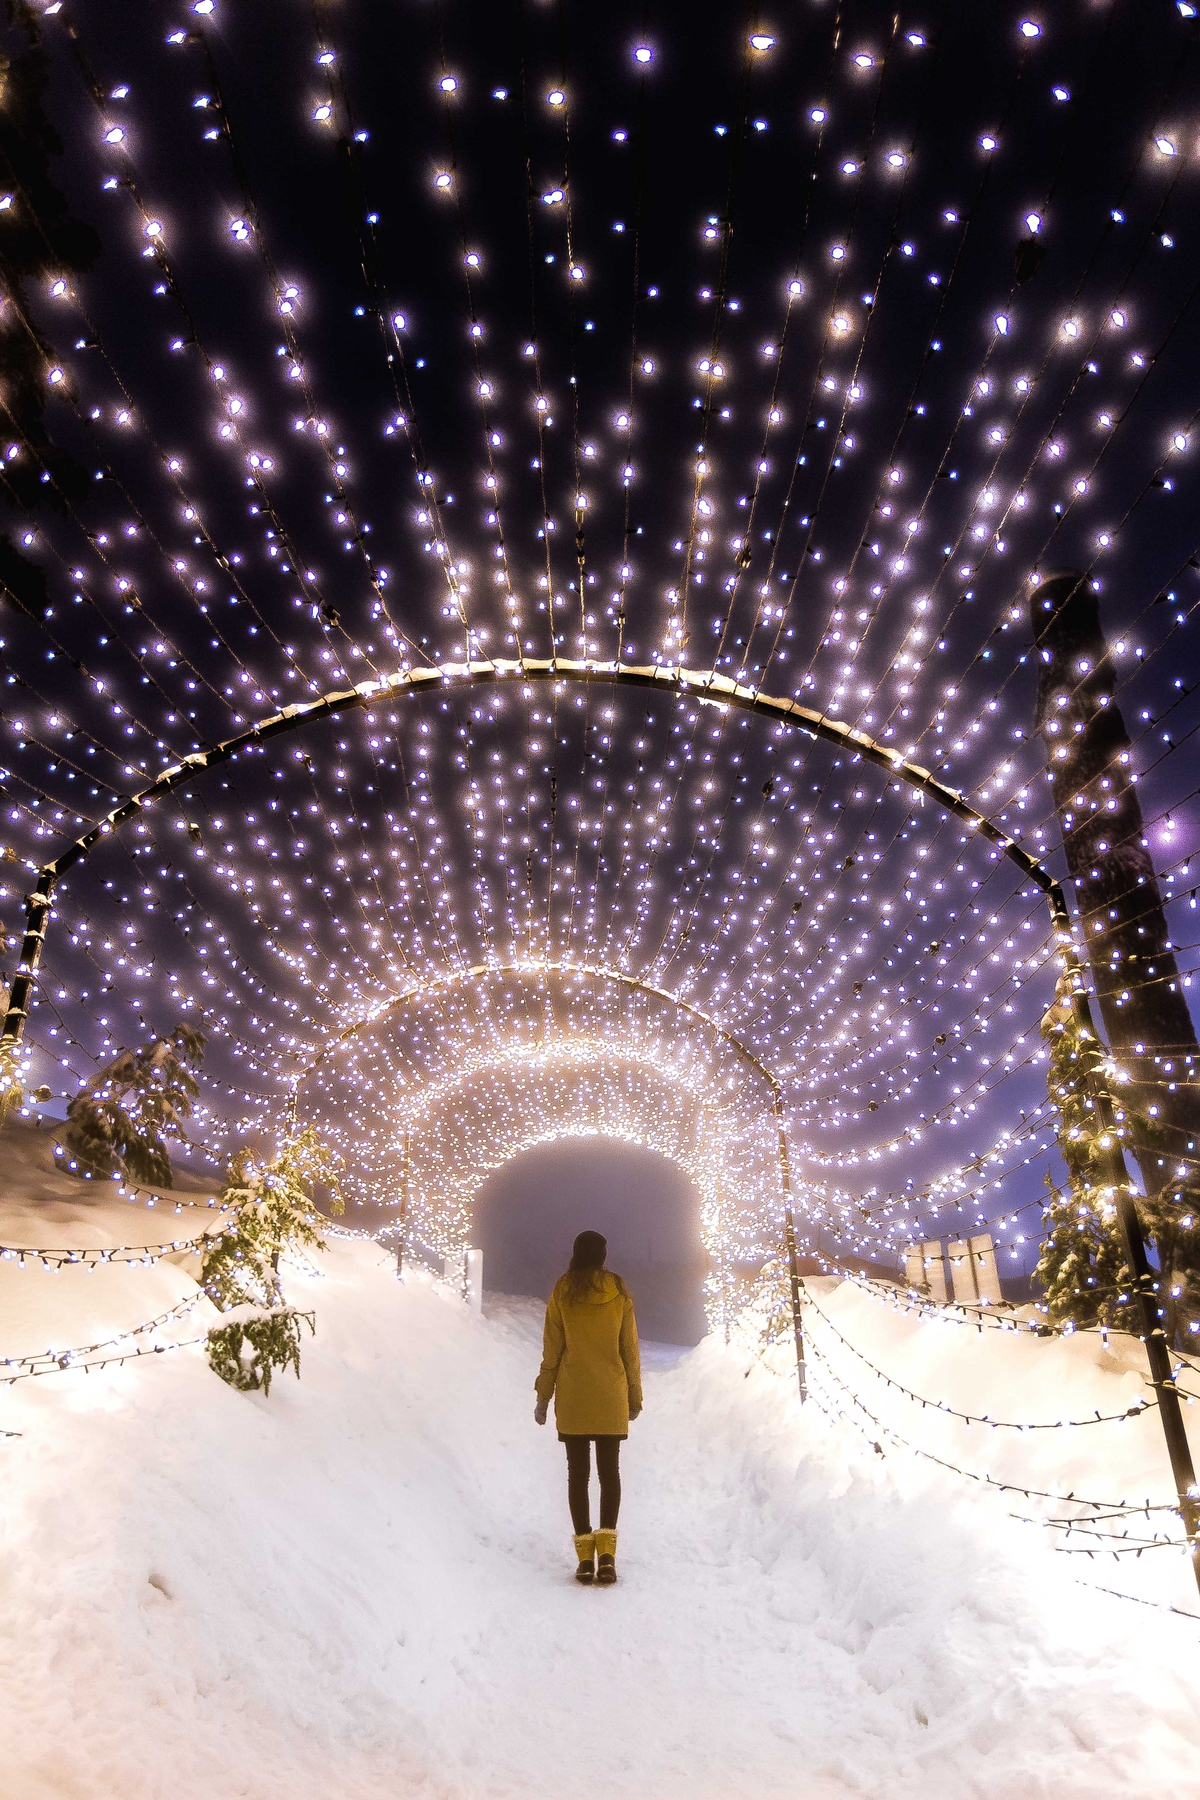 A person walks through a tunnel of lights through the snow